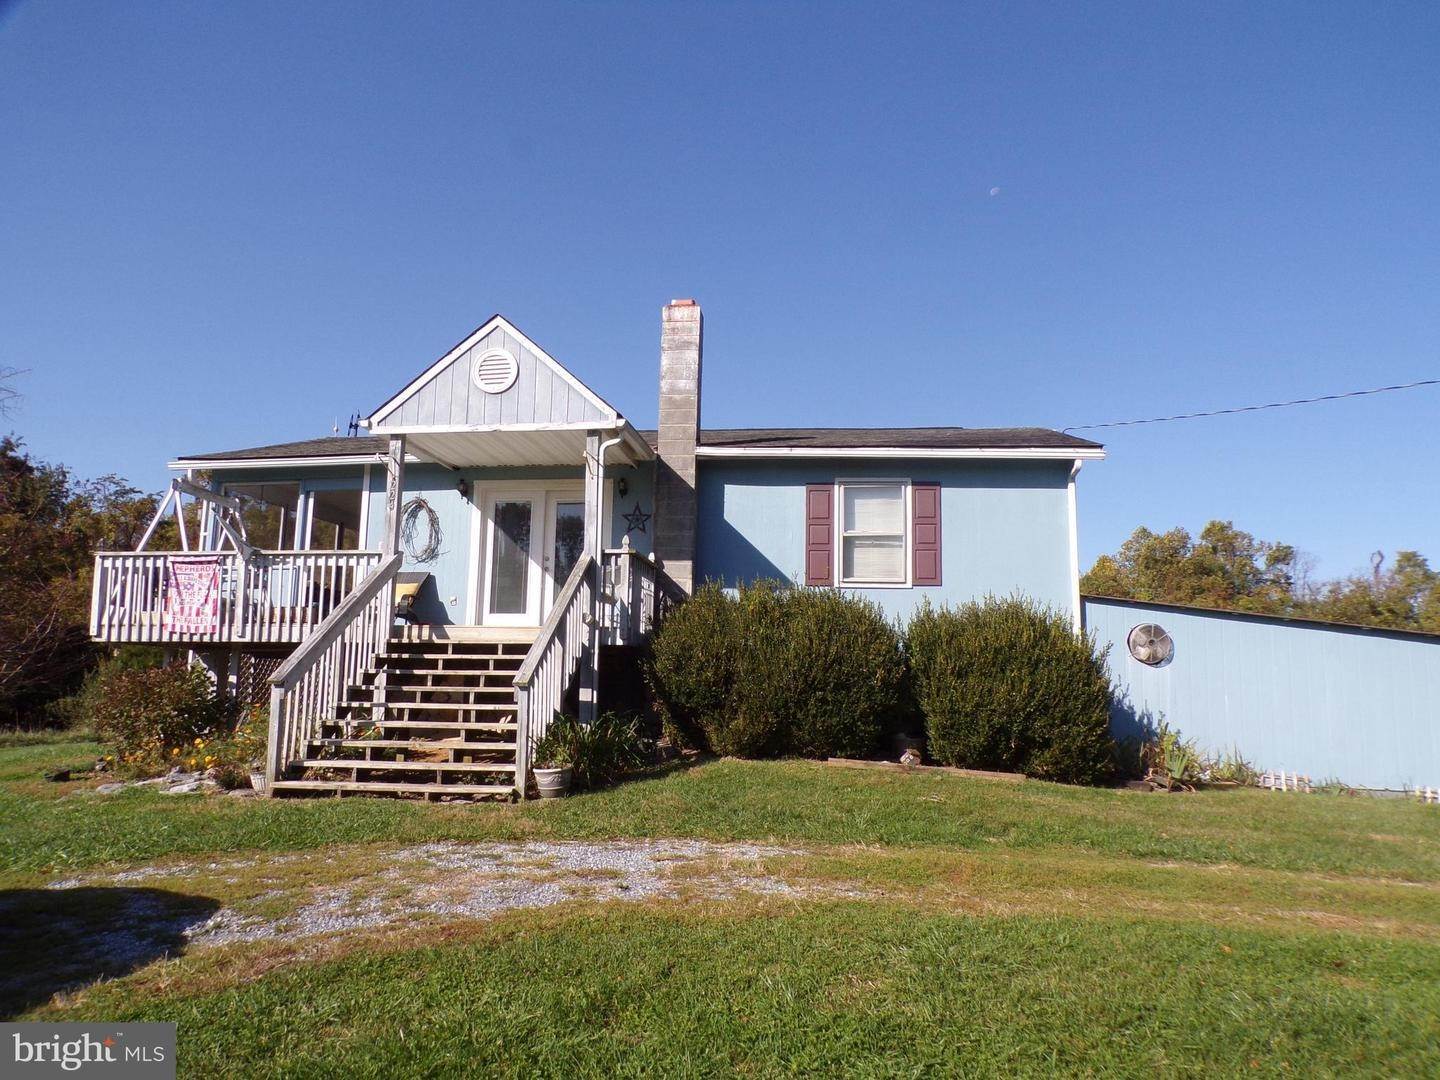 Single Family Homes のために 売買 アット Harpers Ferry, ウェストバージニア 25425 アメリカ